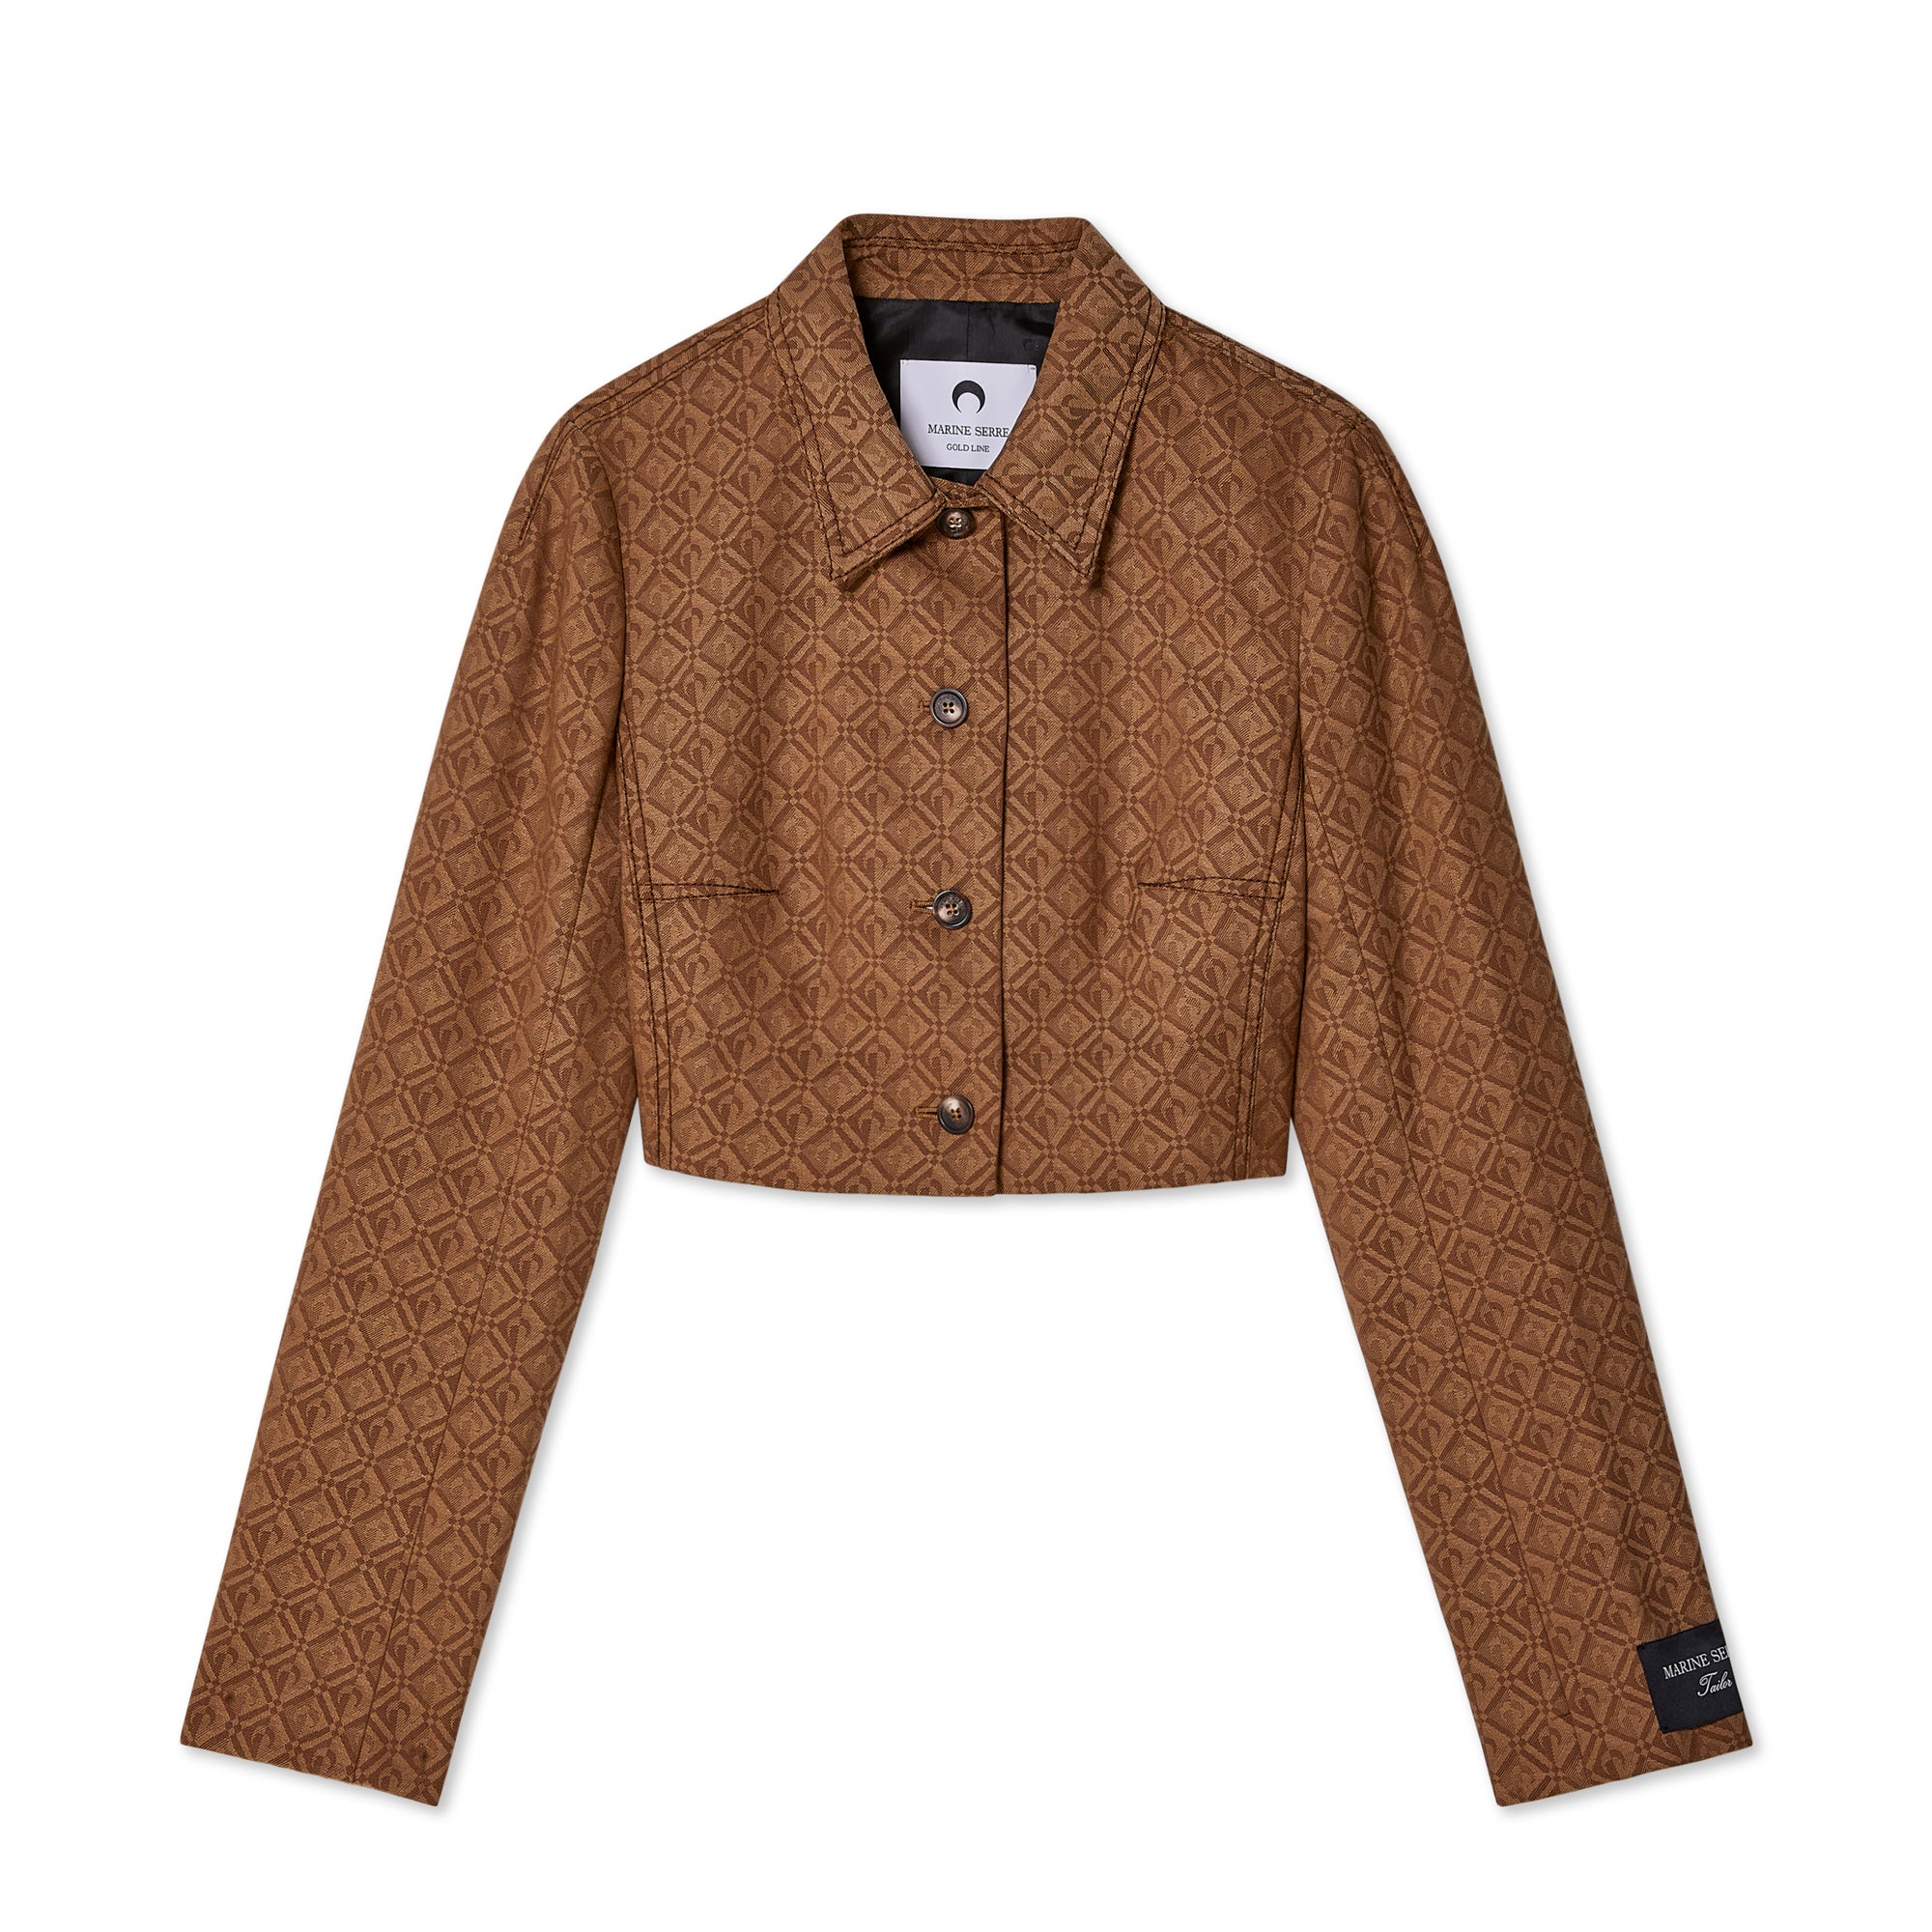 Marine Serre - Women's Jacquard Tailored Jacket - (Brown) view 1